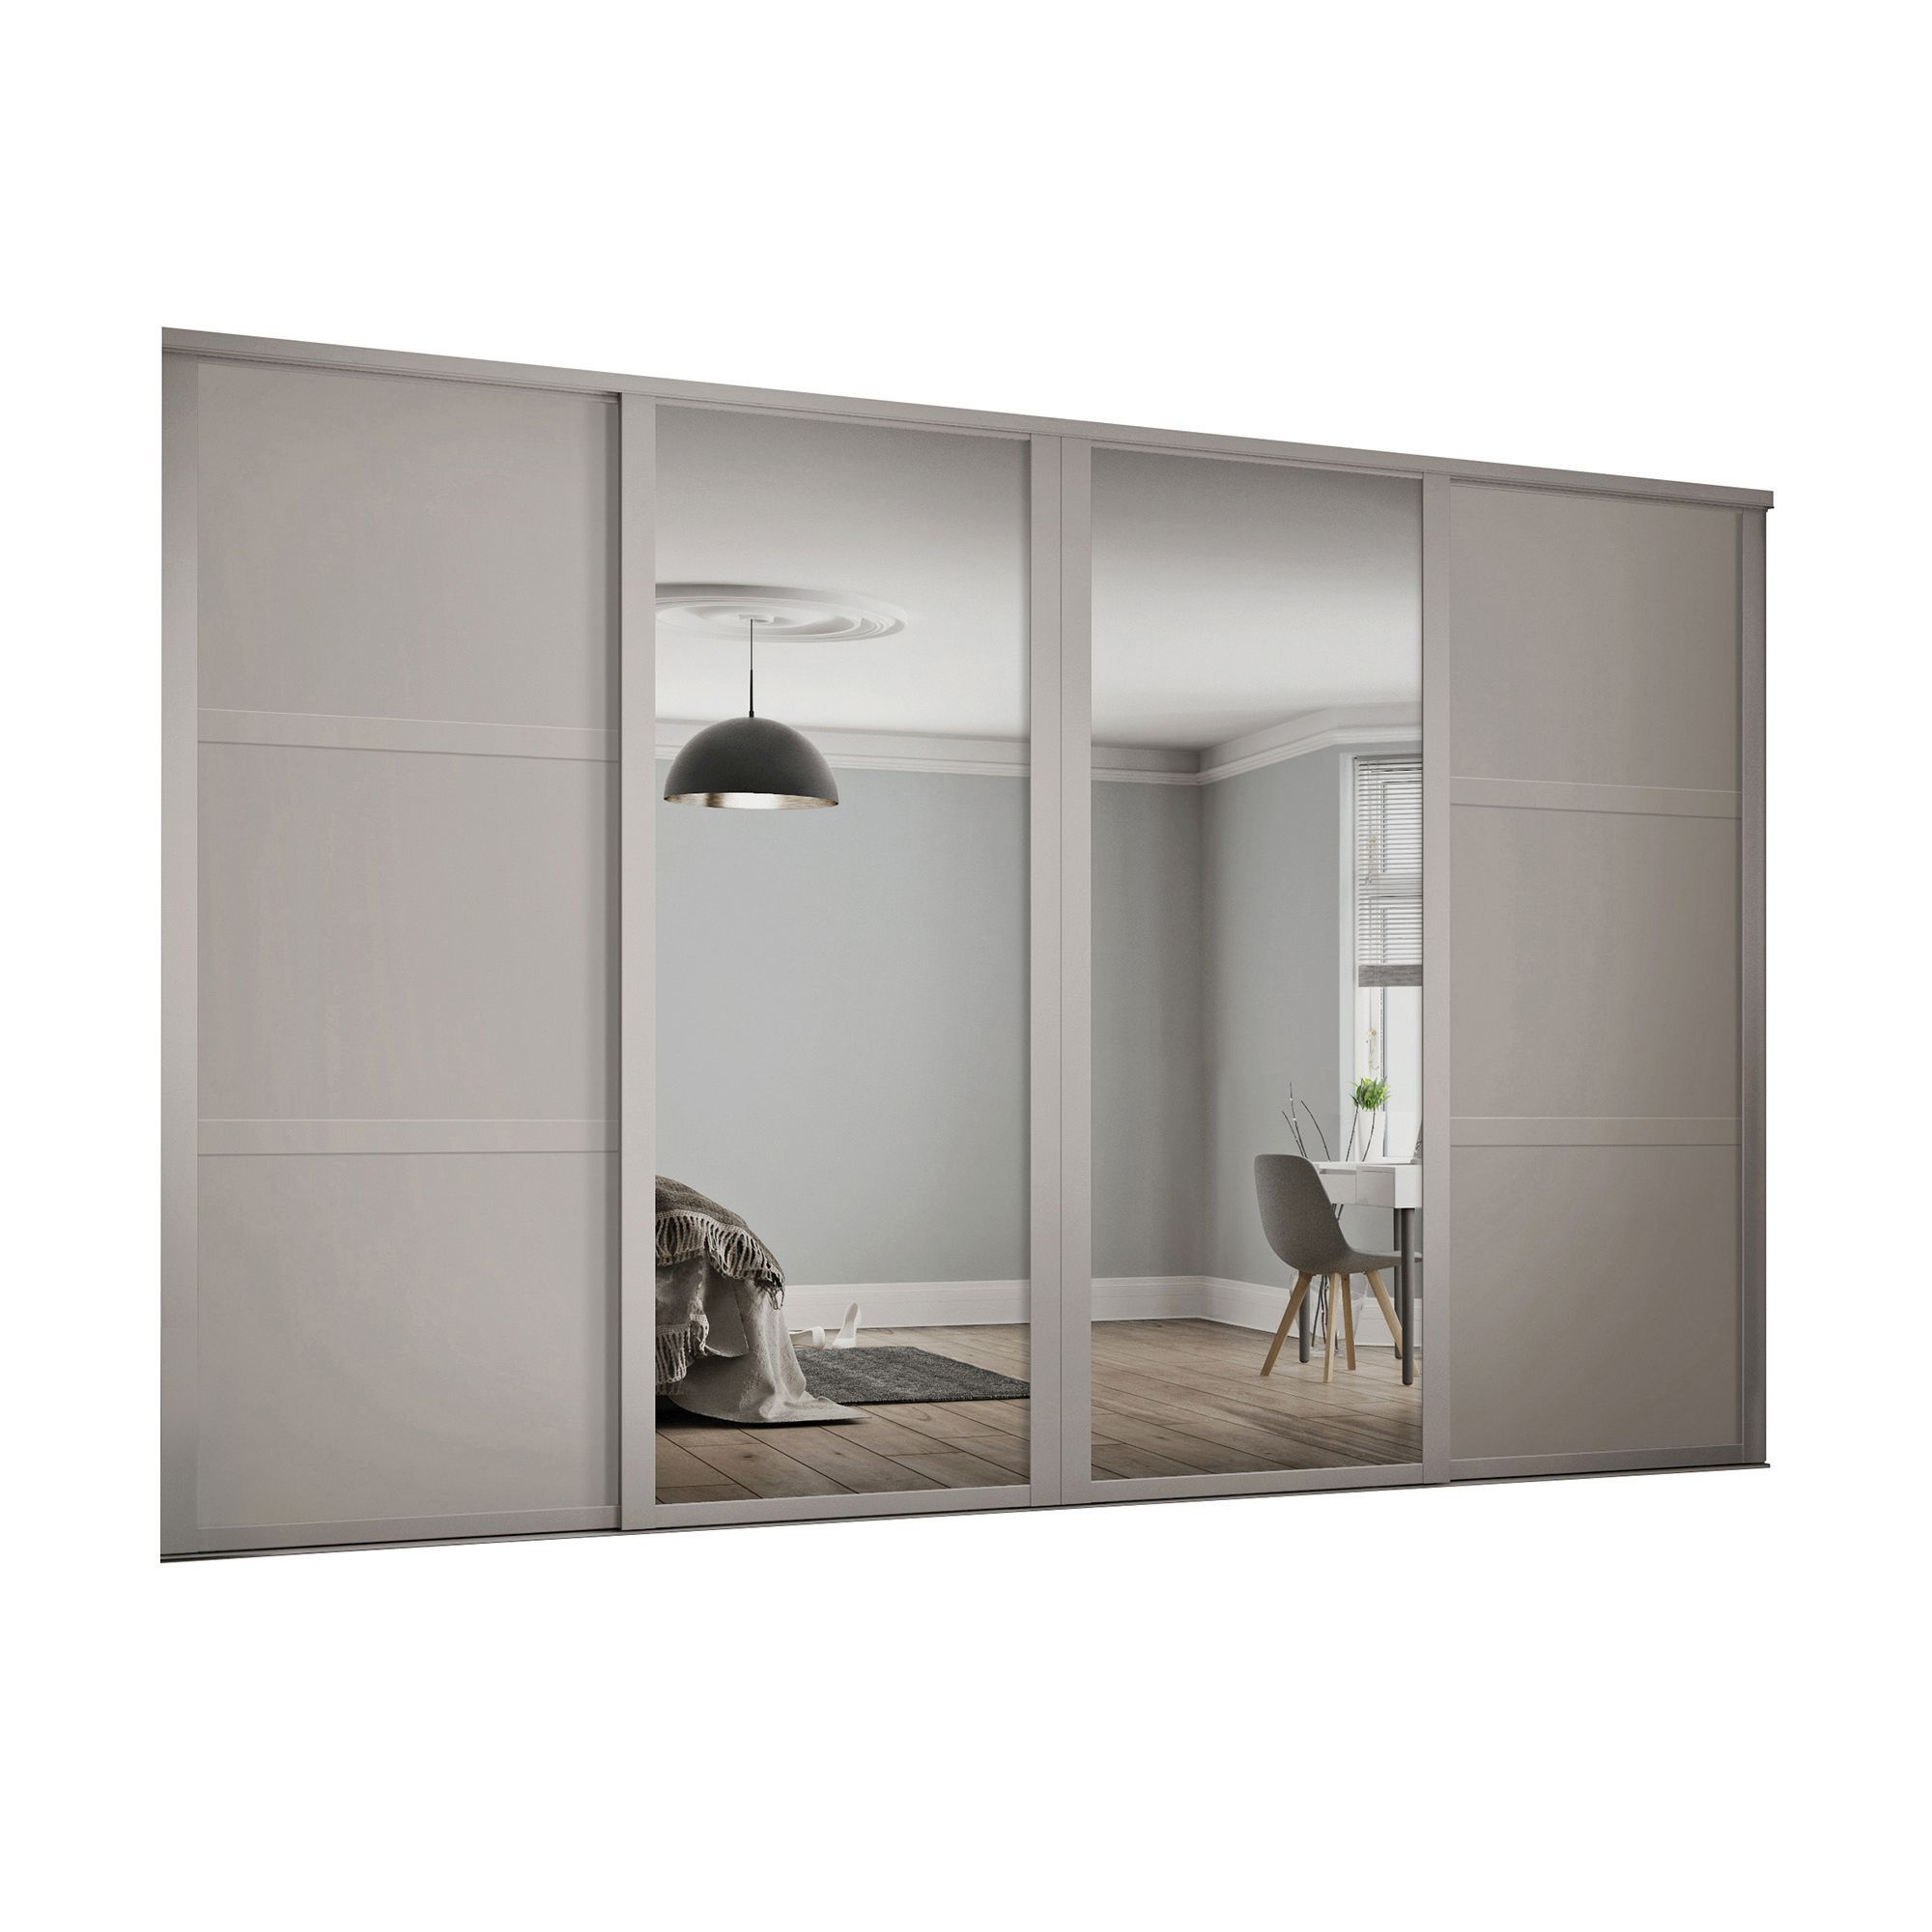 Image of Spacepro 610mm Cashmere Shaker frame 3 panel & 2x Single panel Mirror Sliding Wardrobe Door Kit